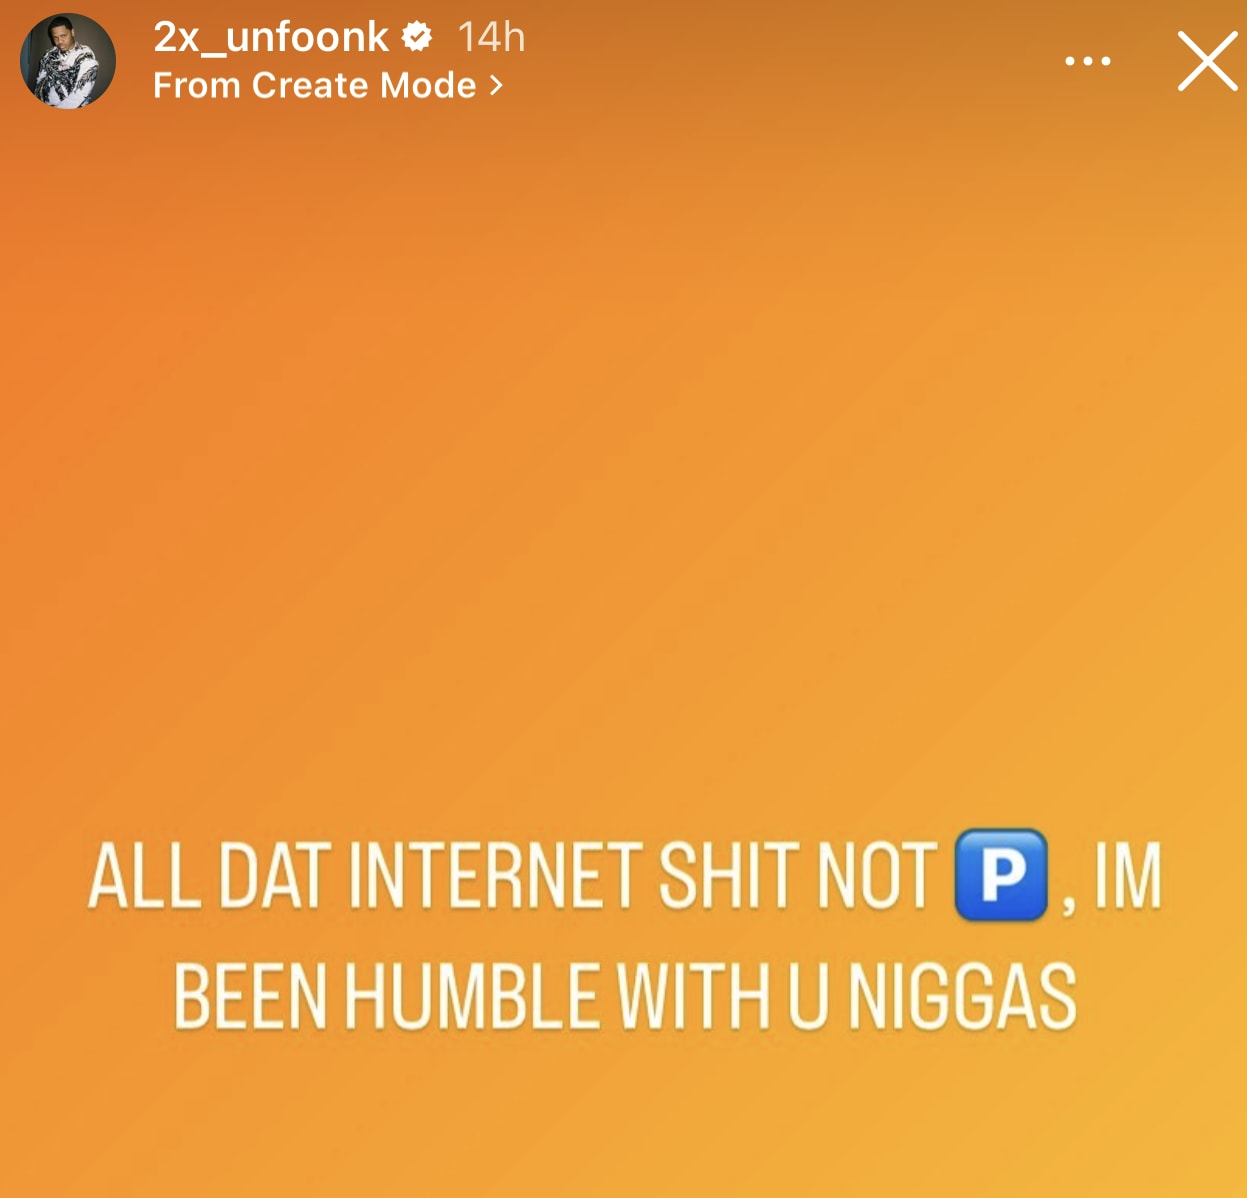 Unfoonk is seen posting on Instagram